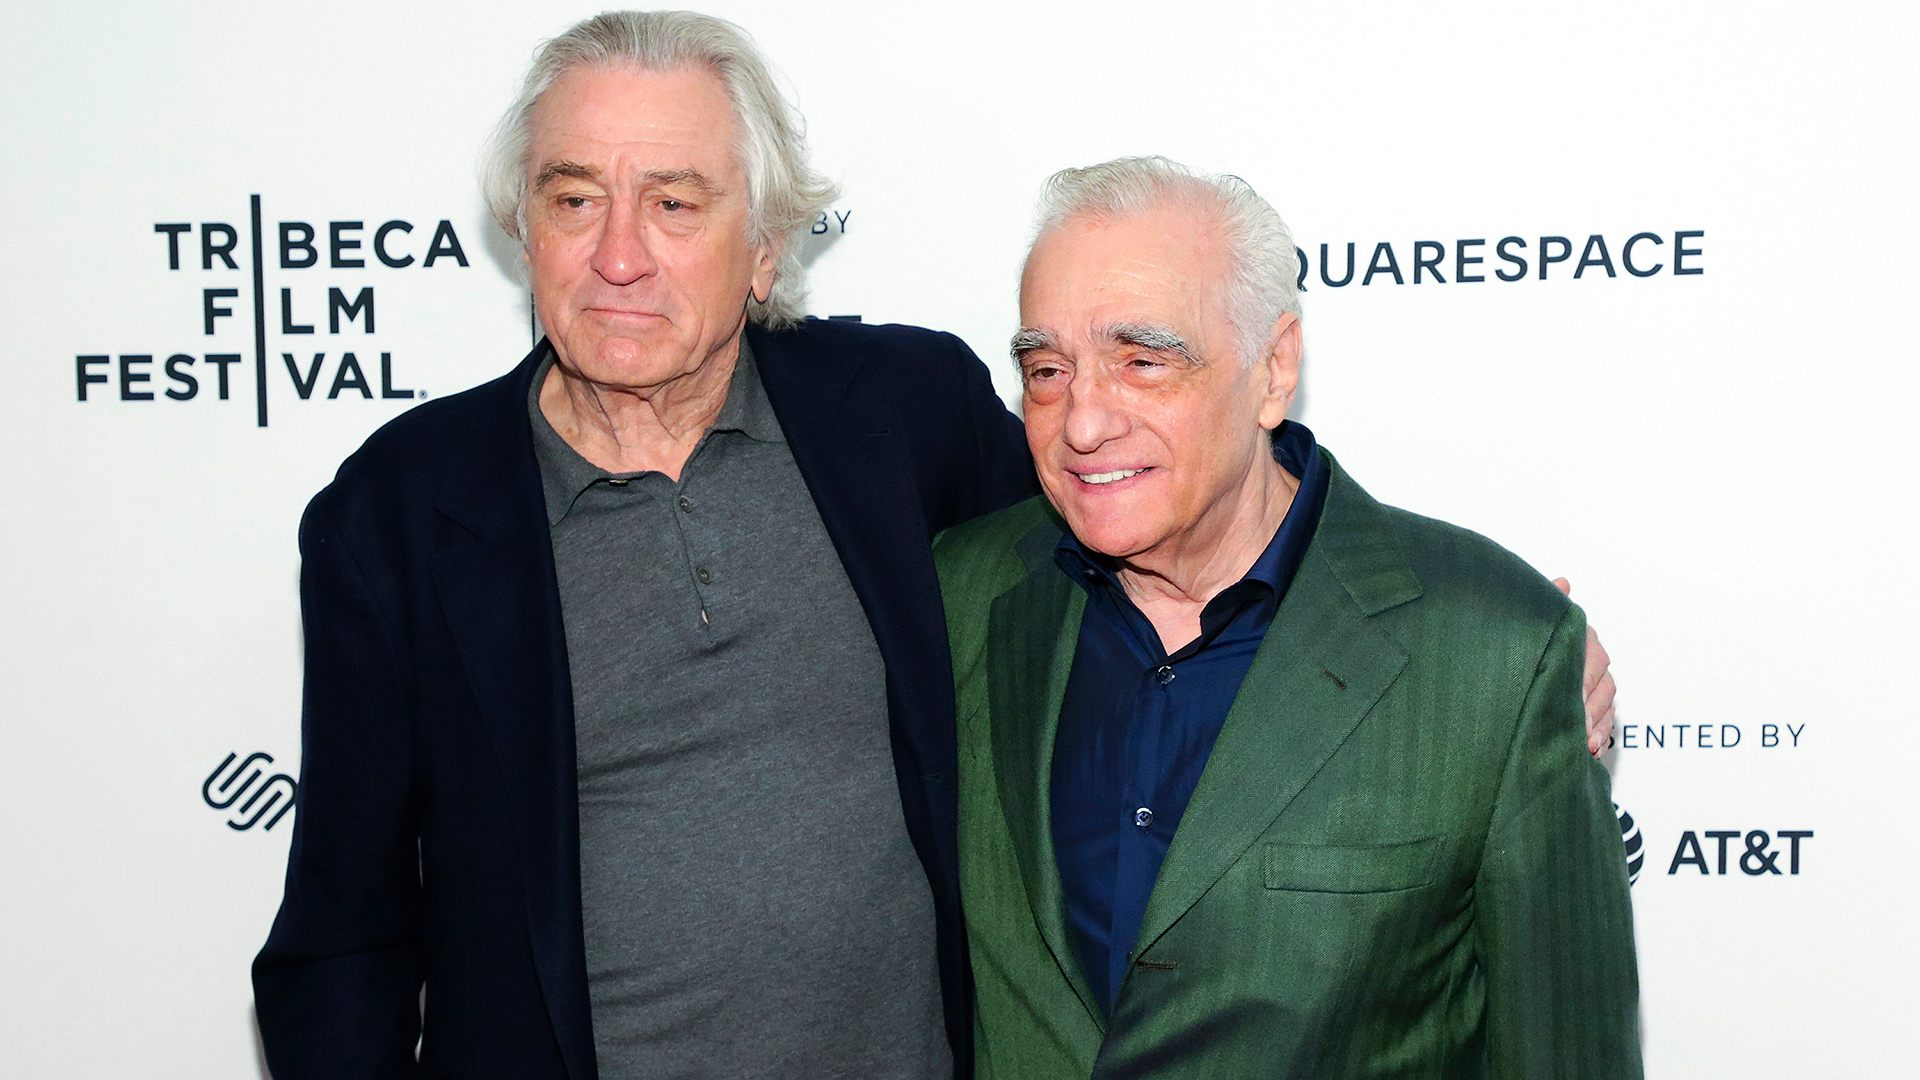 Robert De Niro, Martin Scorsese talk reuniting for ‘The Irishman’ – Fox News